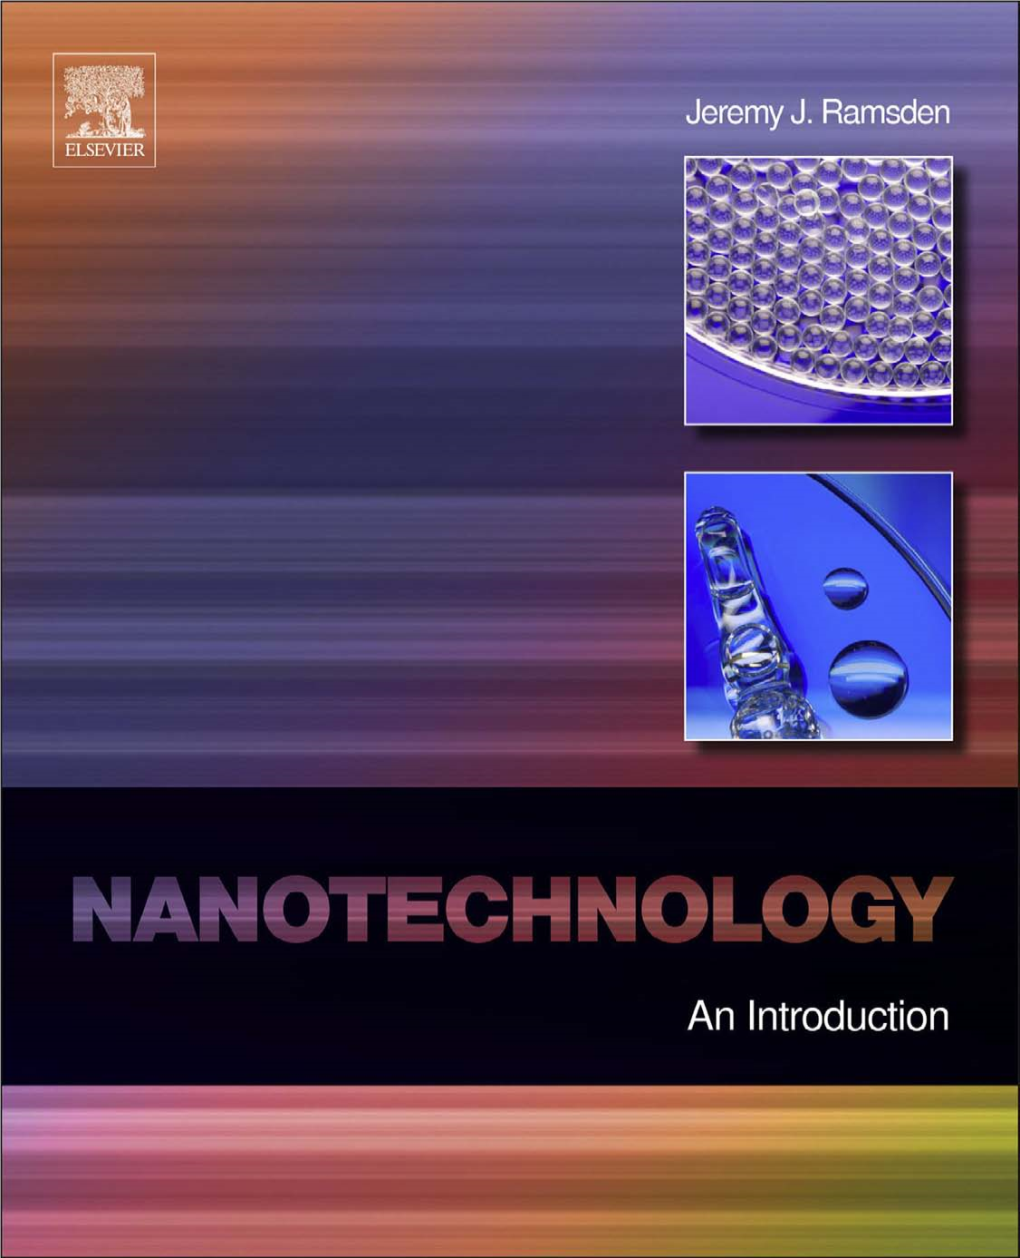 Nanotechnology: an Introduction “01-Fm-I-Iv-9780080964478” — 2011/6/15 — 5:57 — Page 2 — #2